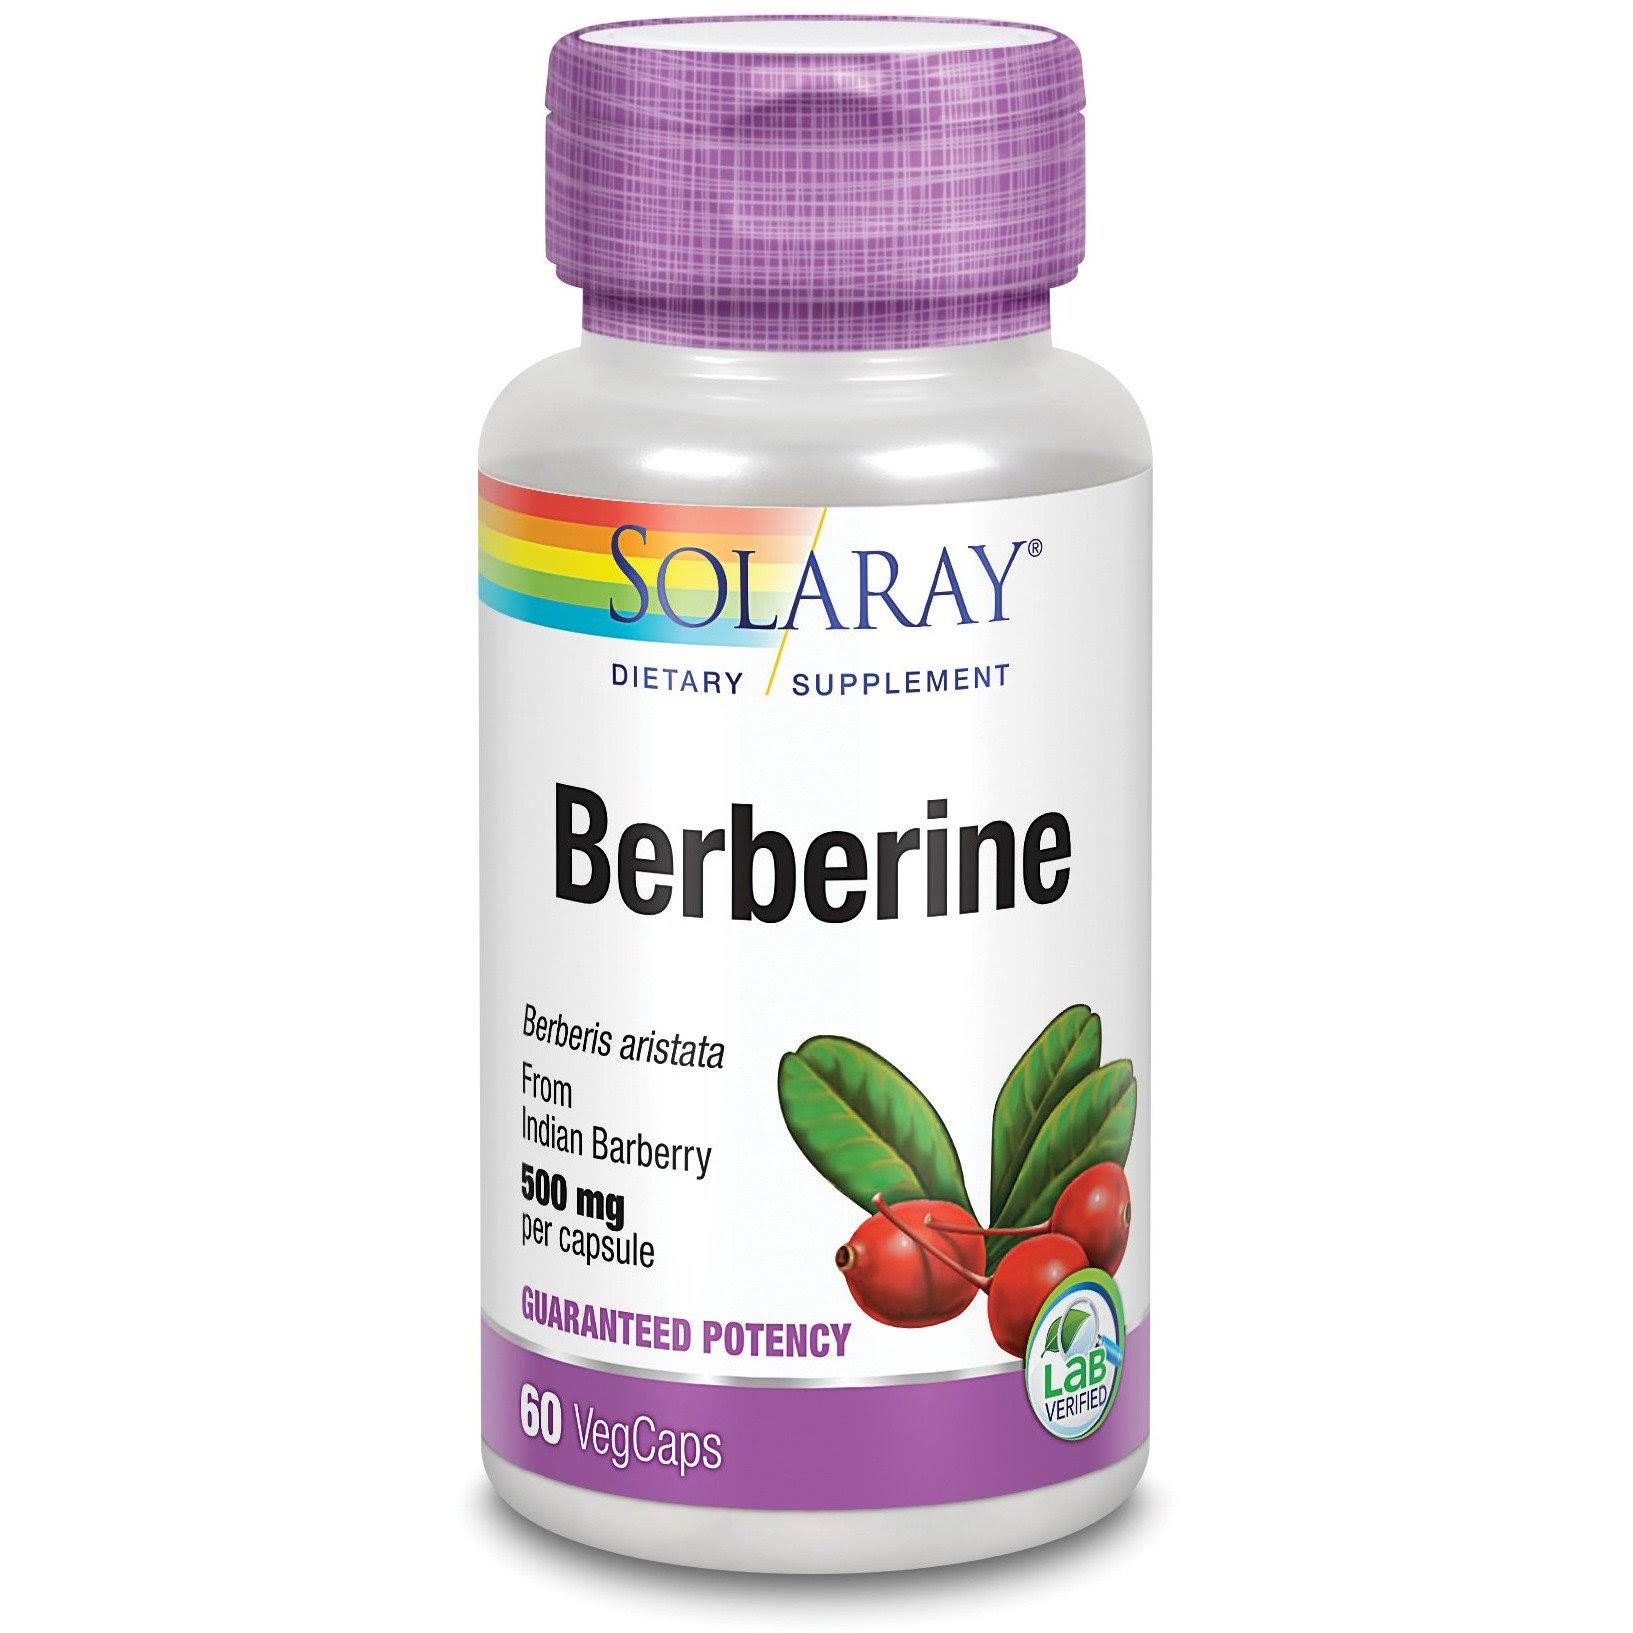 Solaray Berberine Supplement - 500mg, 60 VegCaps